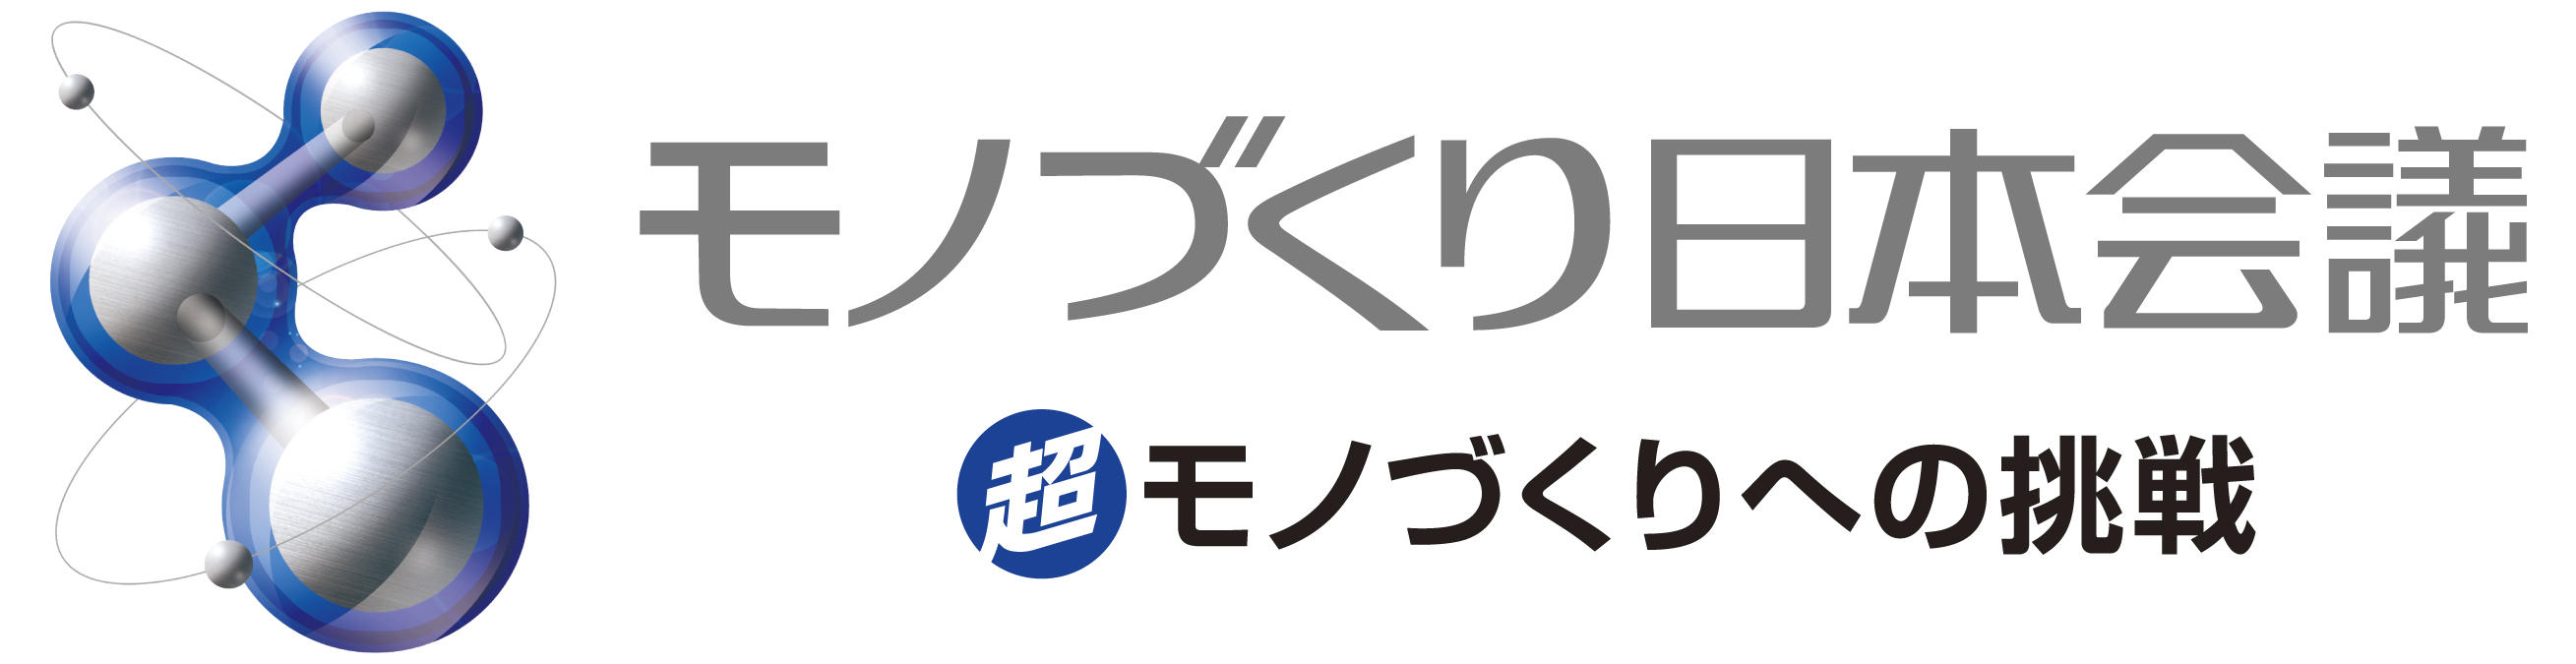 cho-monodzukuri-logo_4C.jpg